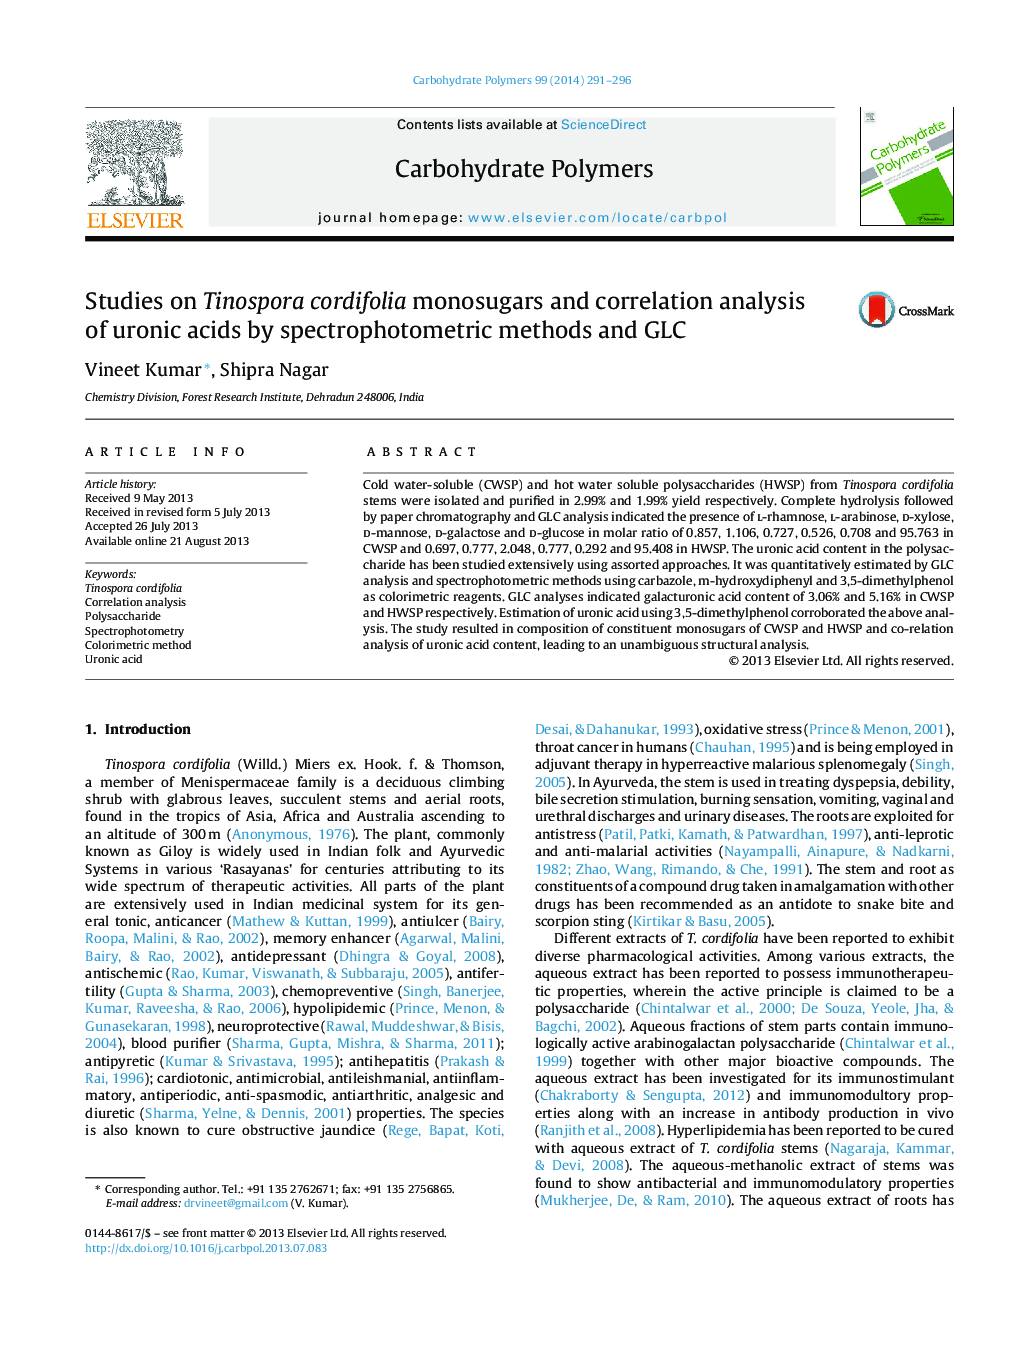 Studies on Tinospora cordifolia monosugars and correlation analysis of uronic acids by spectrophotometric methods and GLC